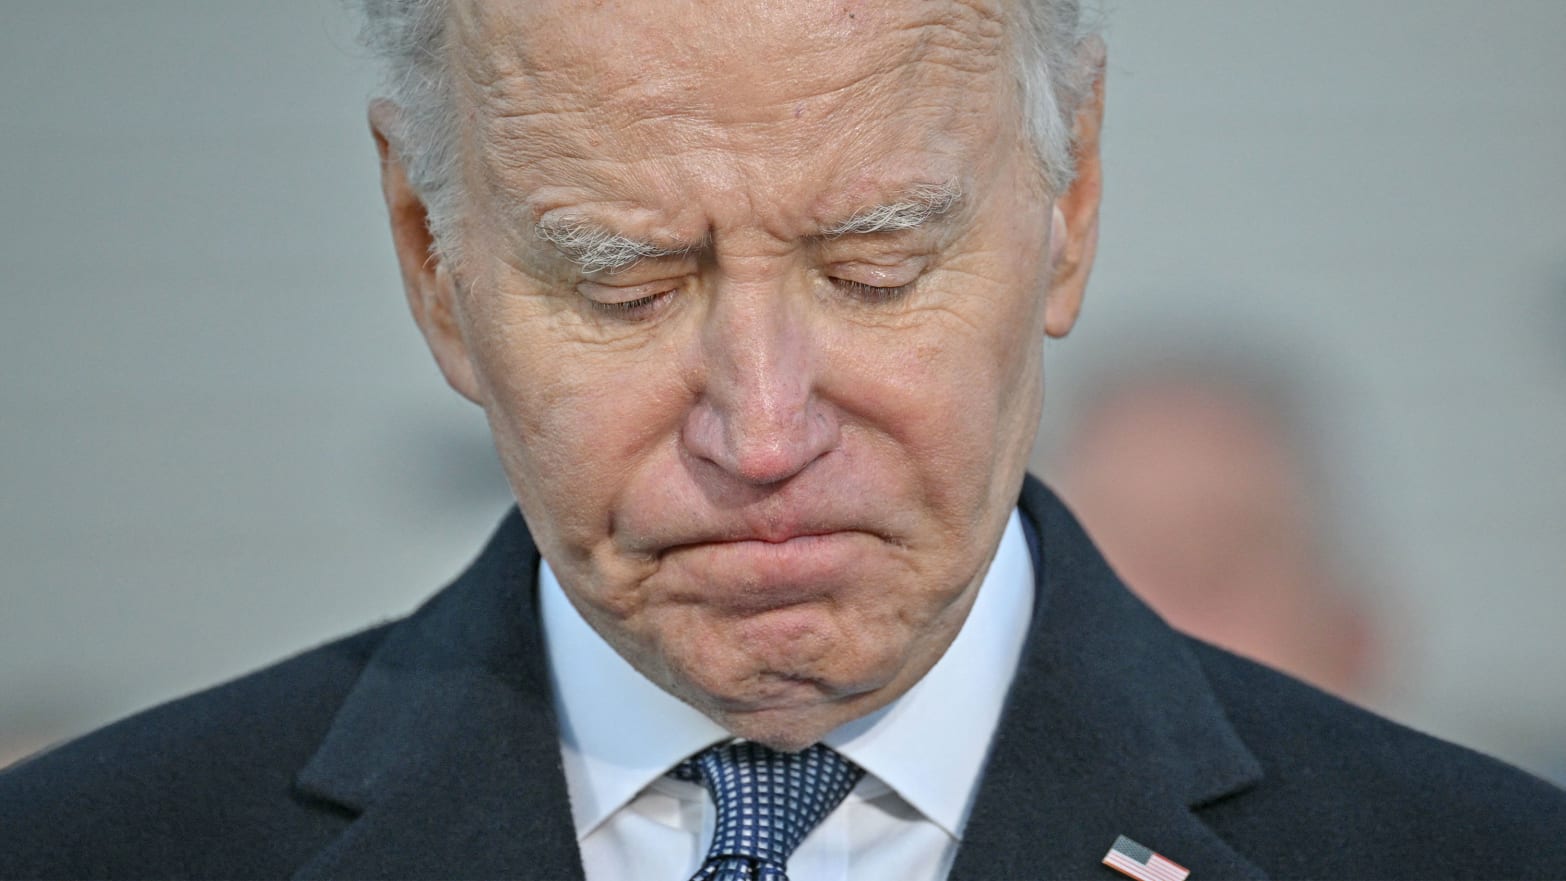 A close up photo of Joe Biden looking down and sad